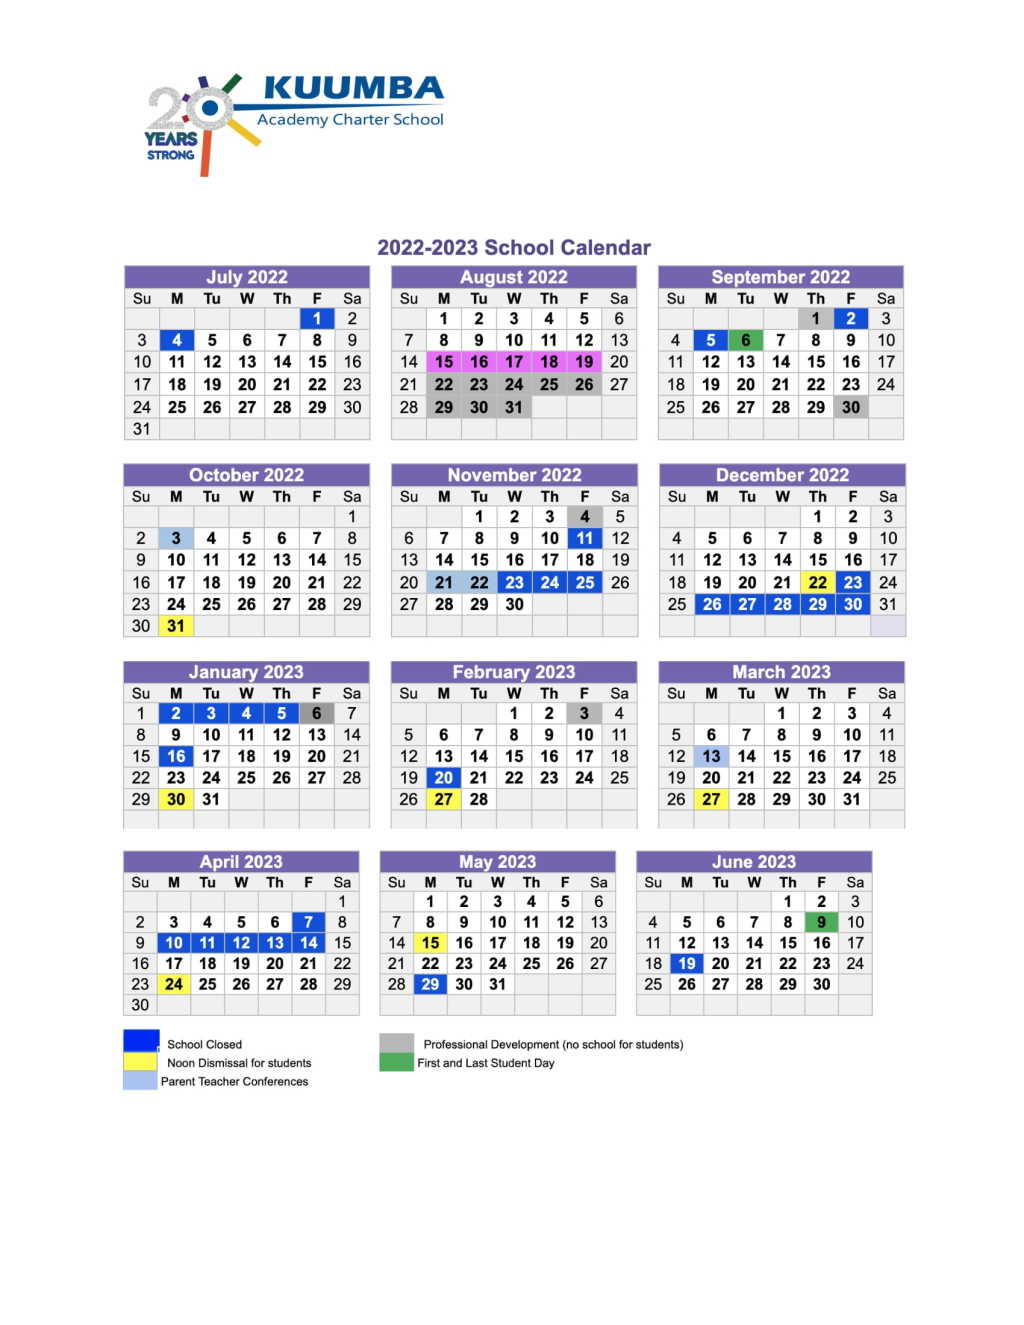 calendar-kuumba-academy-charter-school